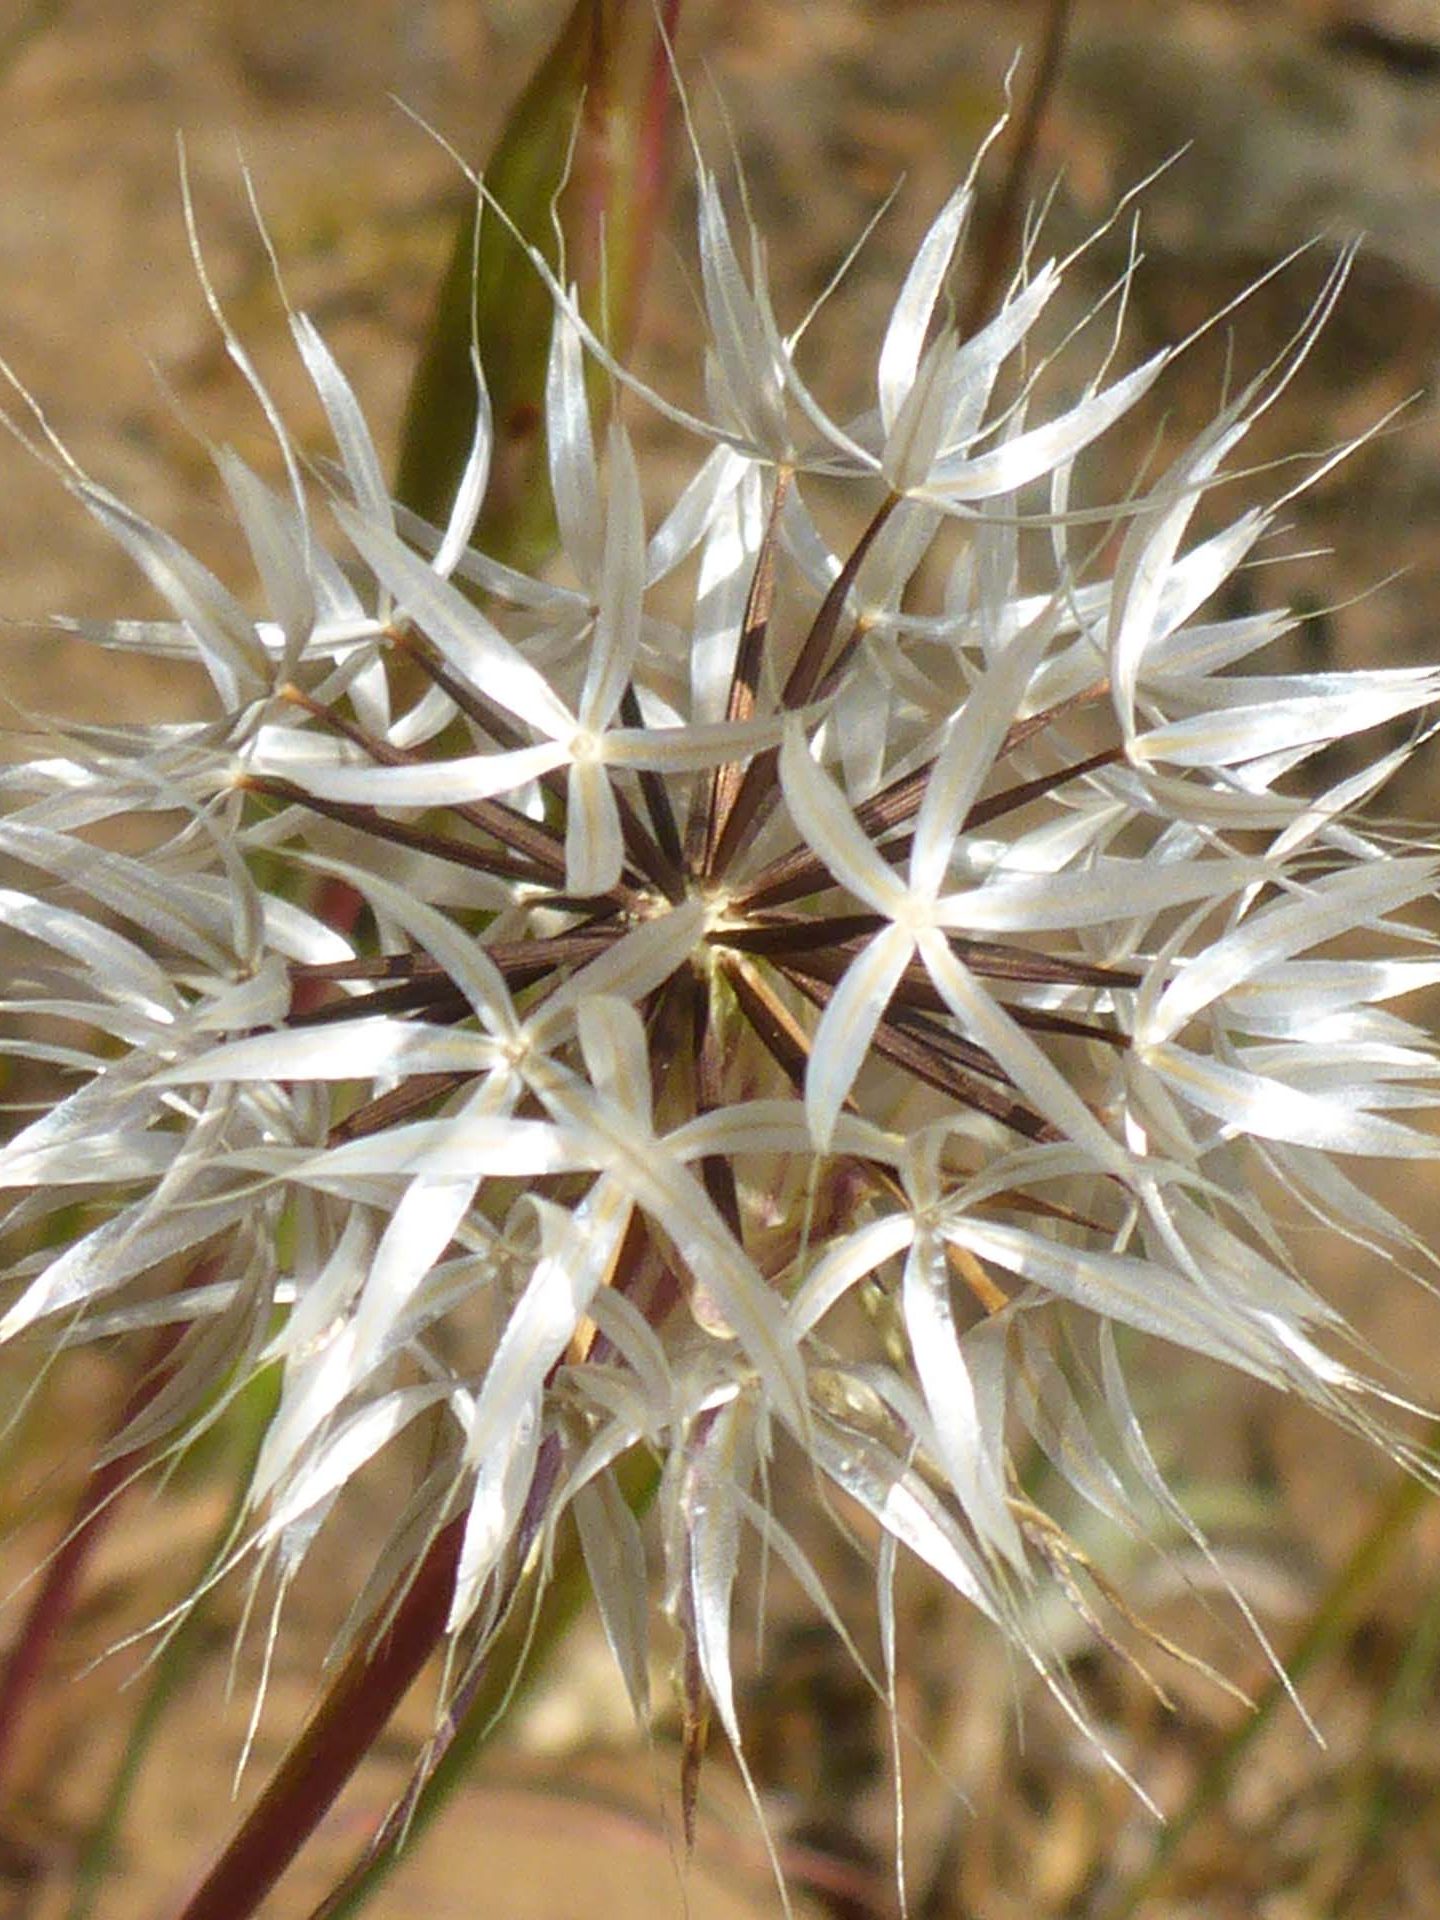 Silverpuffs seed head close-up. D. Burk.